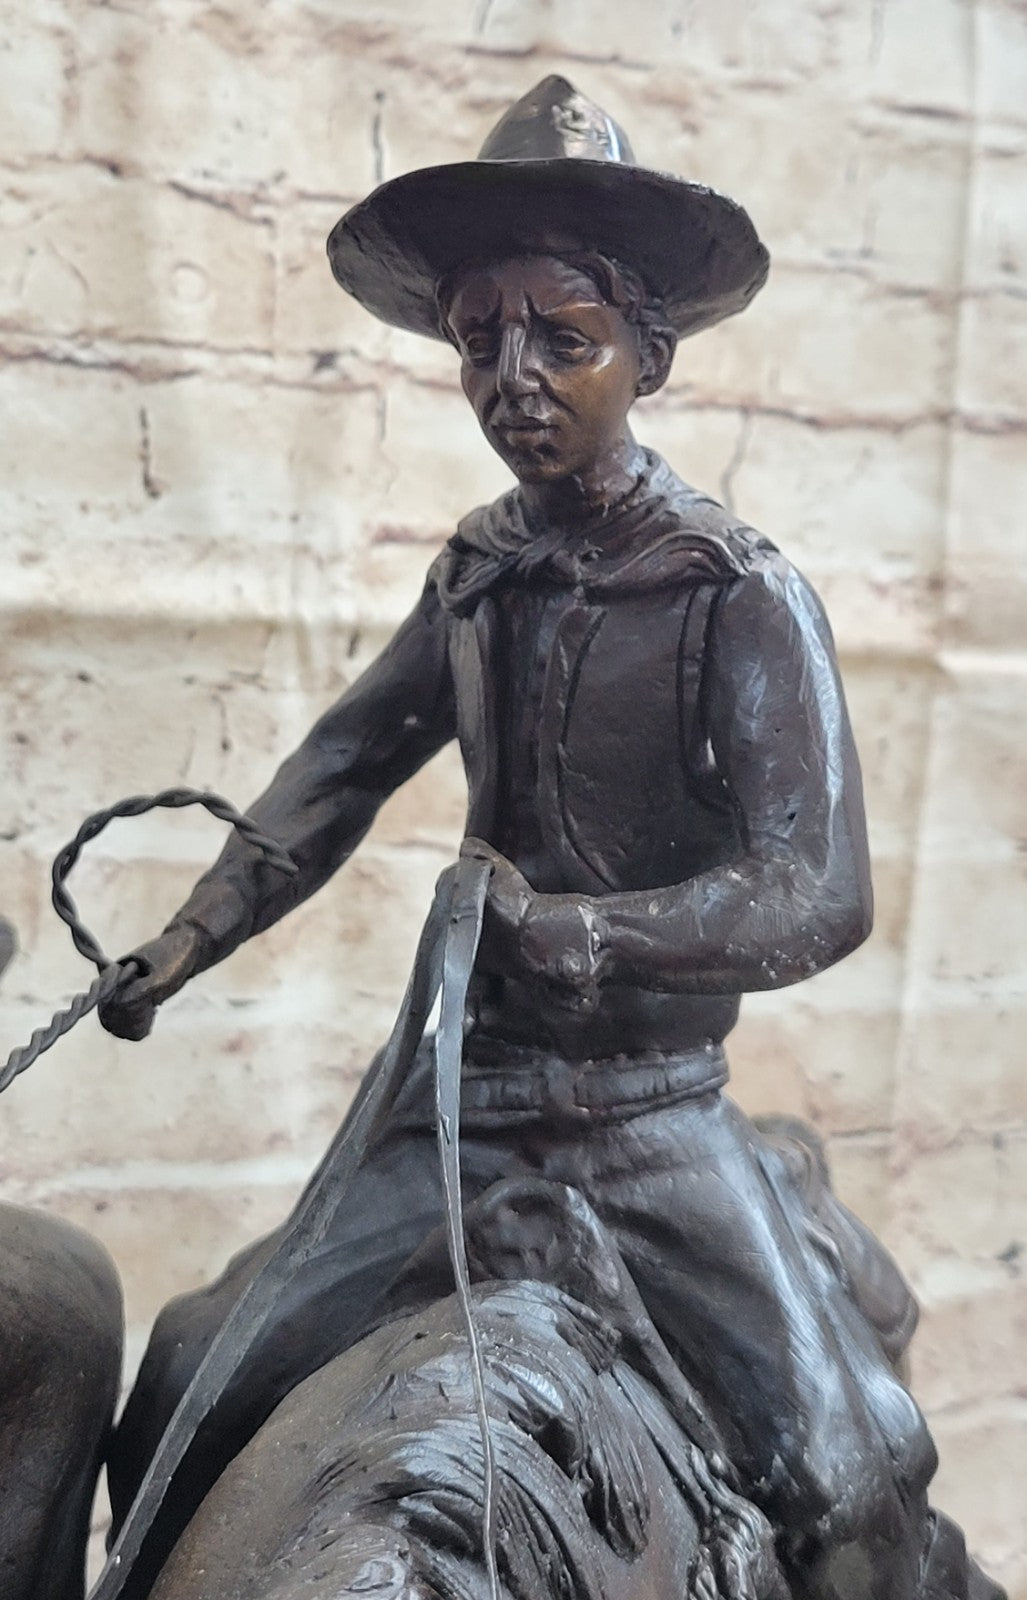 Bolter Bronze Statue Sculpture Figurine By American C.M.Russell Handmade Figurine